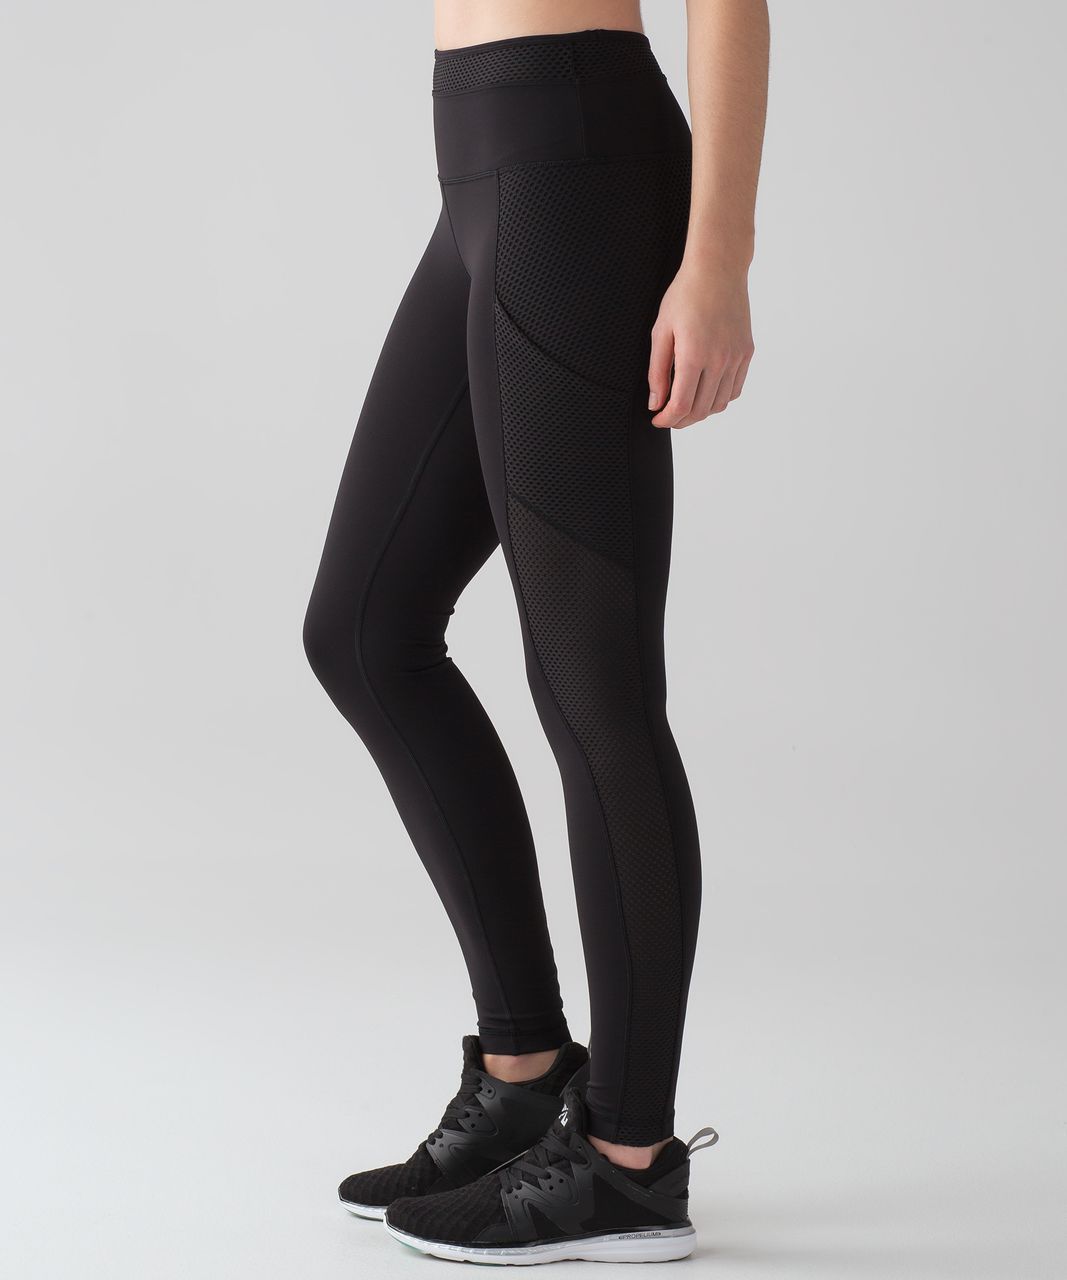 black lululemon leggings with pockets